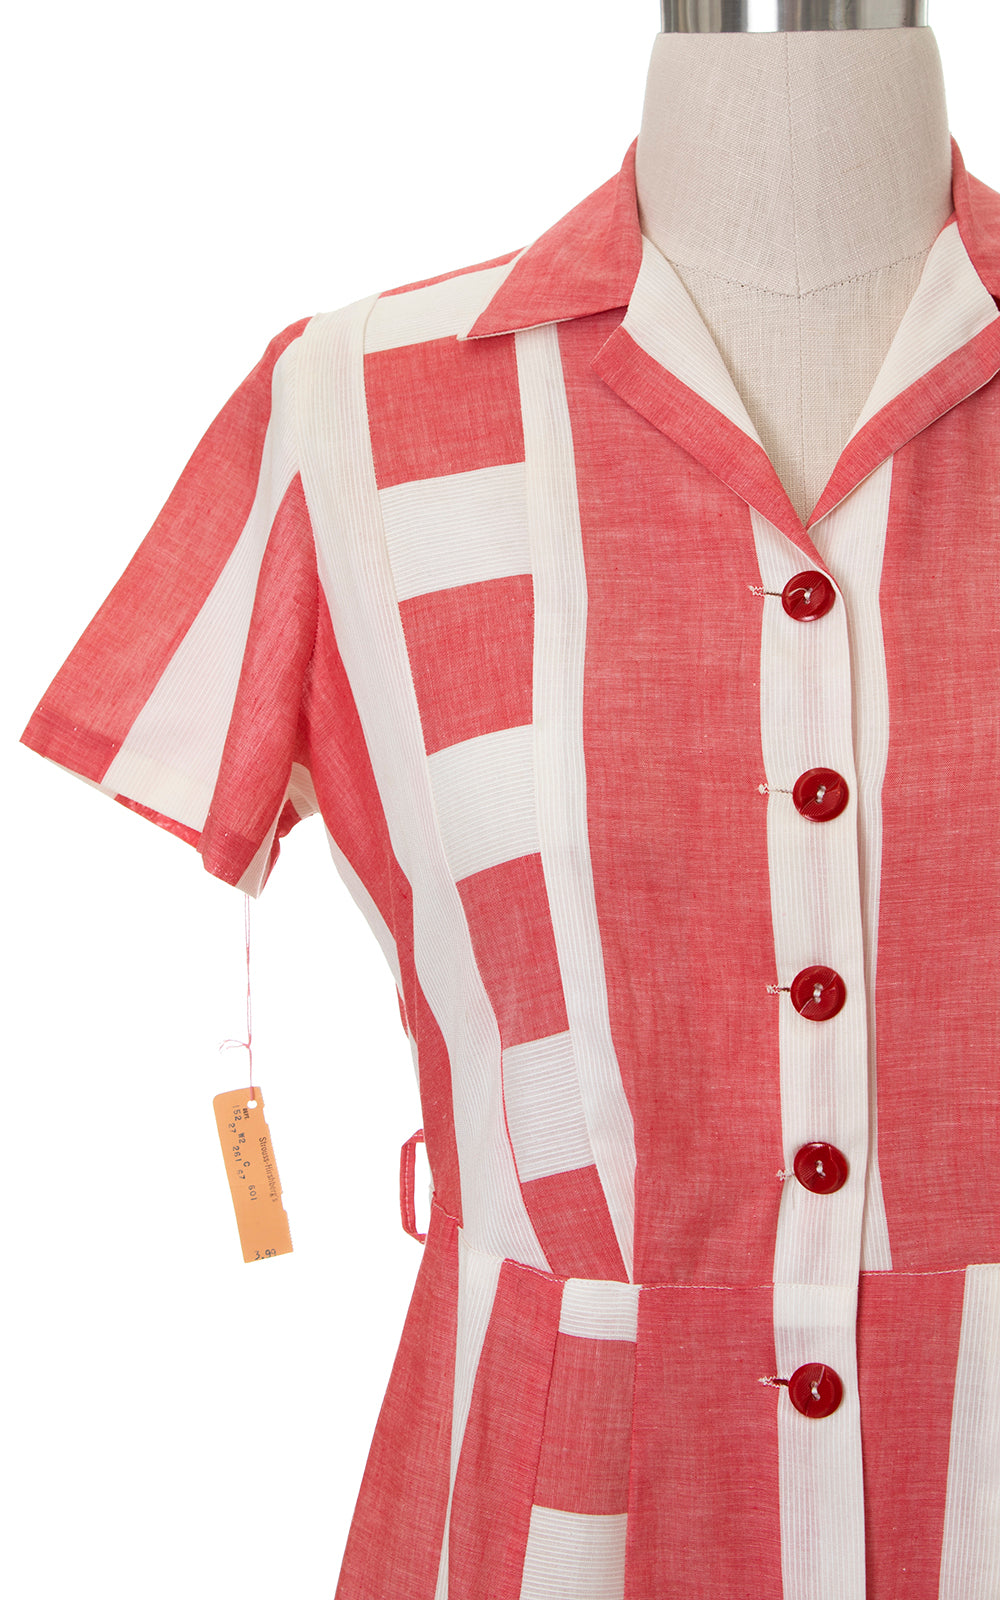 1940s DEADSTOCK Striped Cotton Shirtwaist Dress | large/x-large